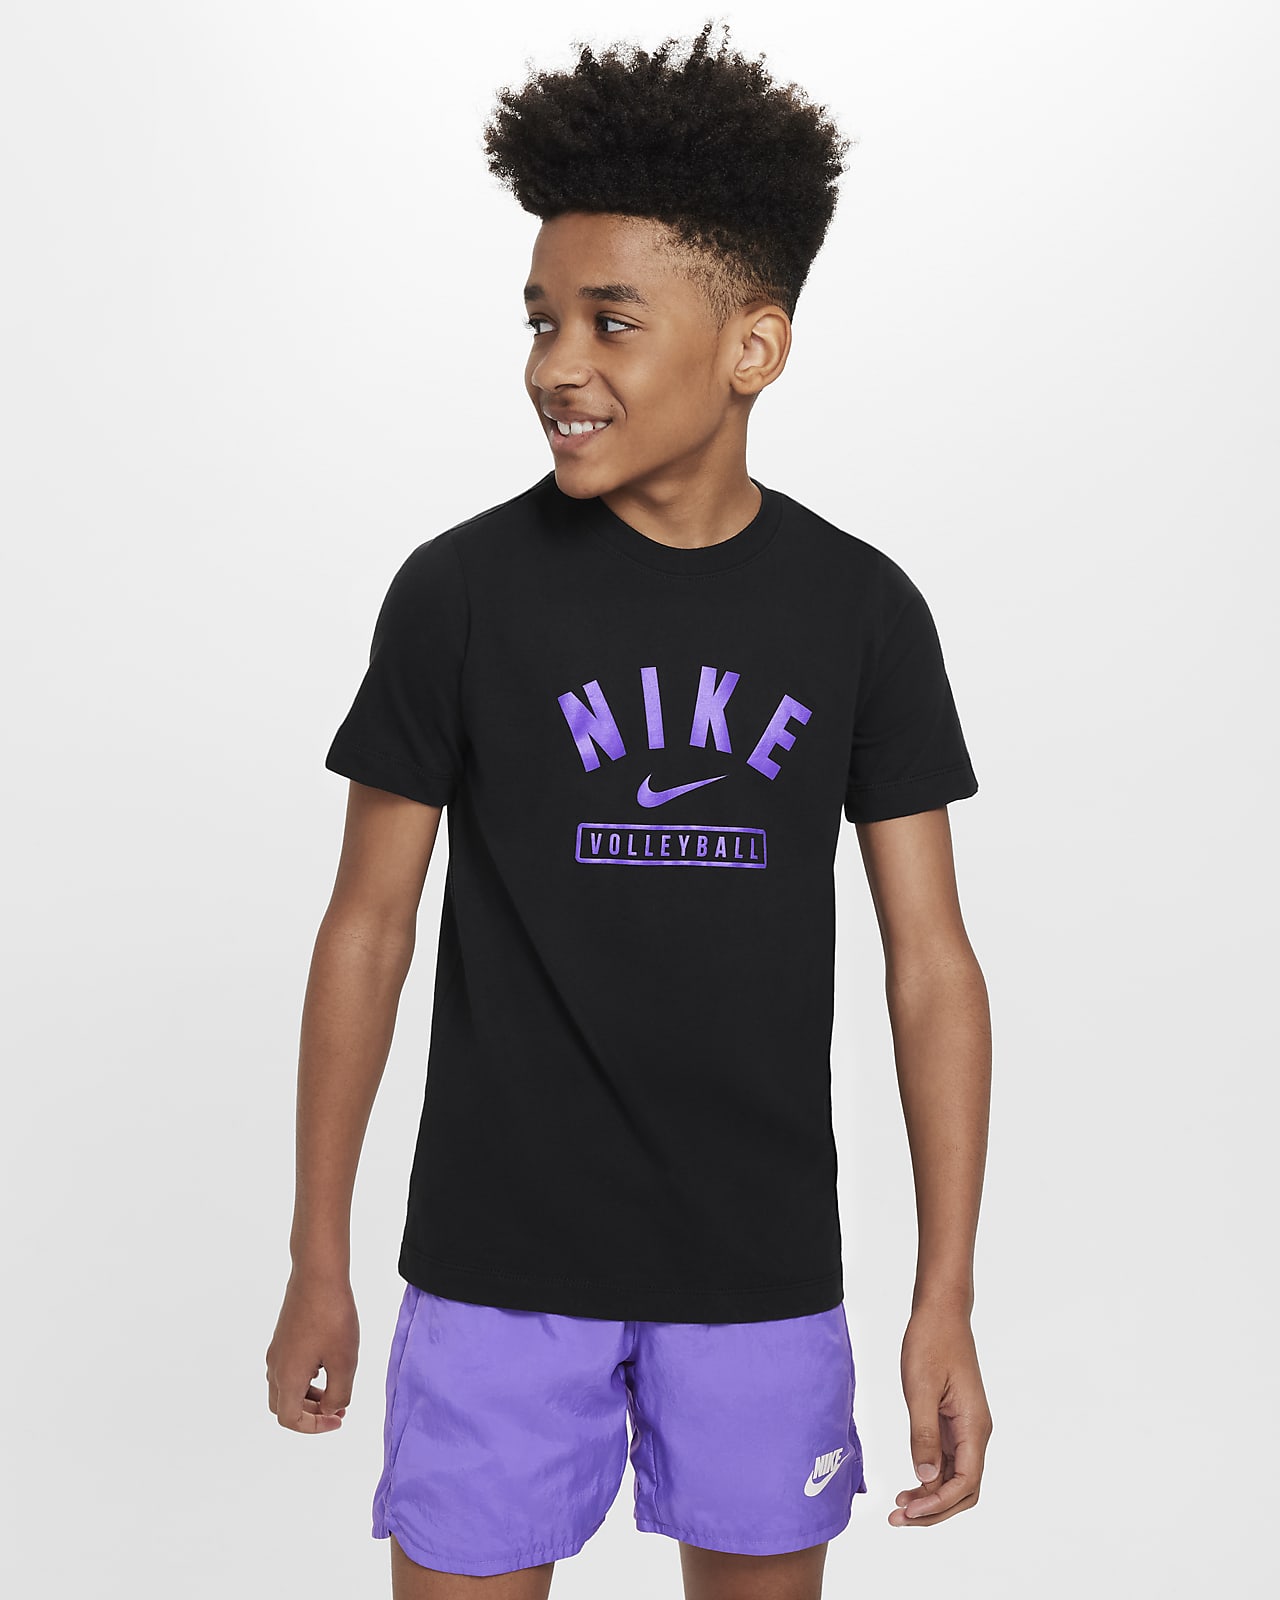 Nike Big Kids' Volleyball T-Shirt